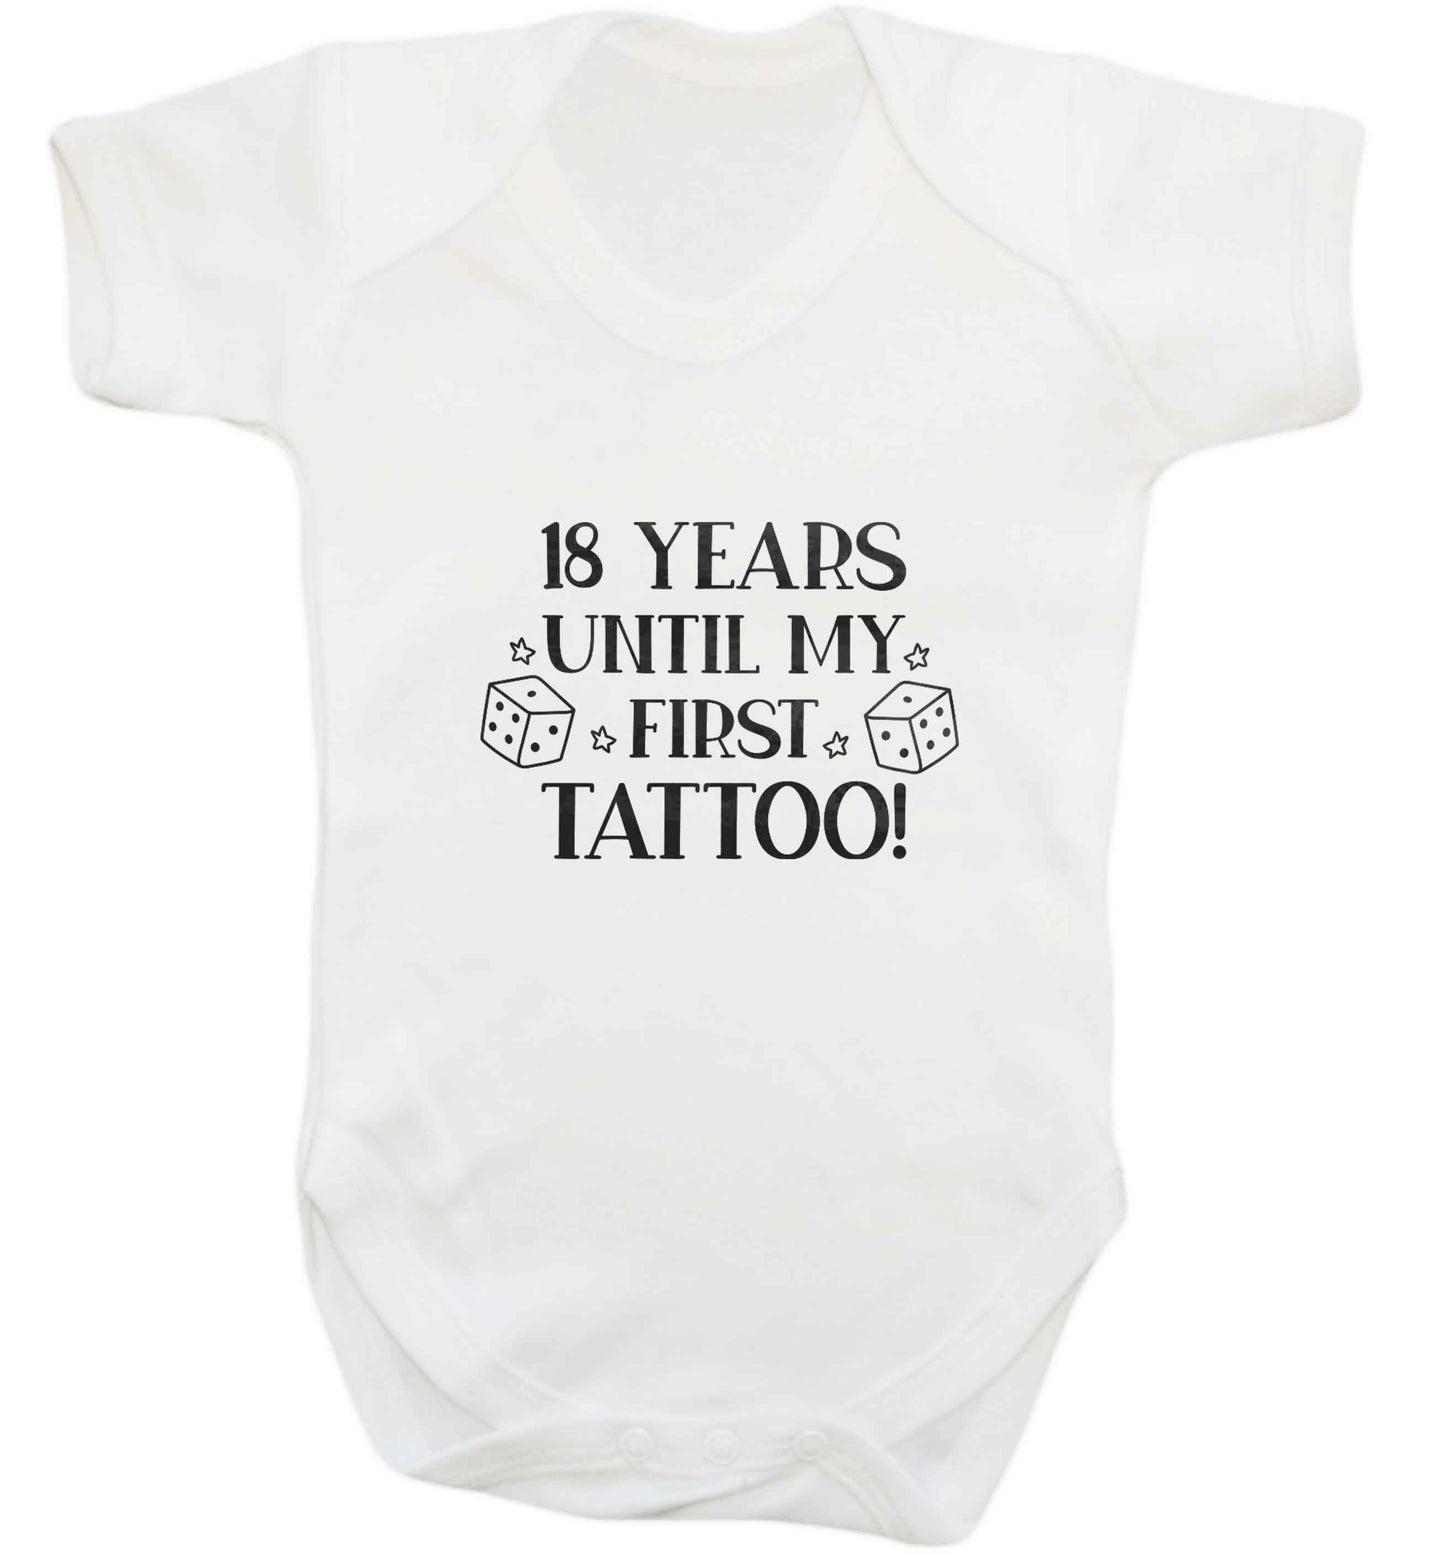 18 Years Until my First Tattoo baby vest white 18-24 months